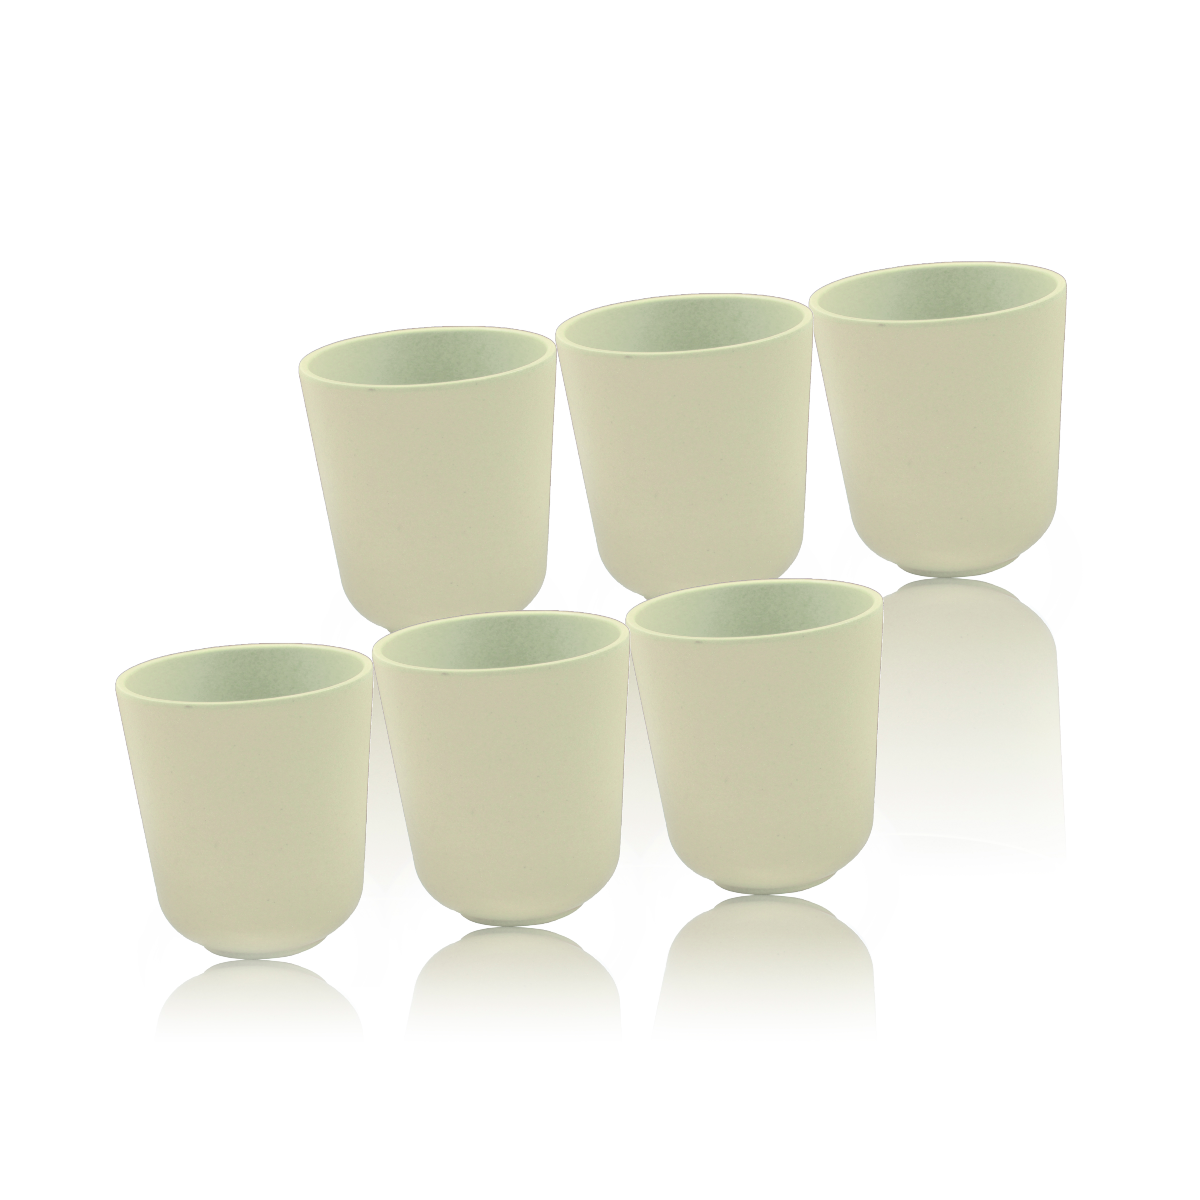 Cup Set - 6 pieces